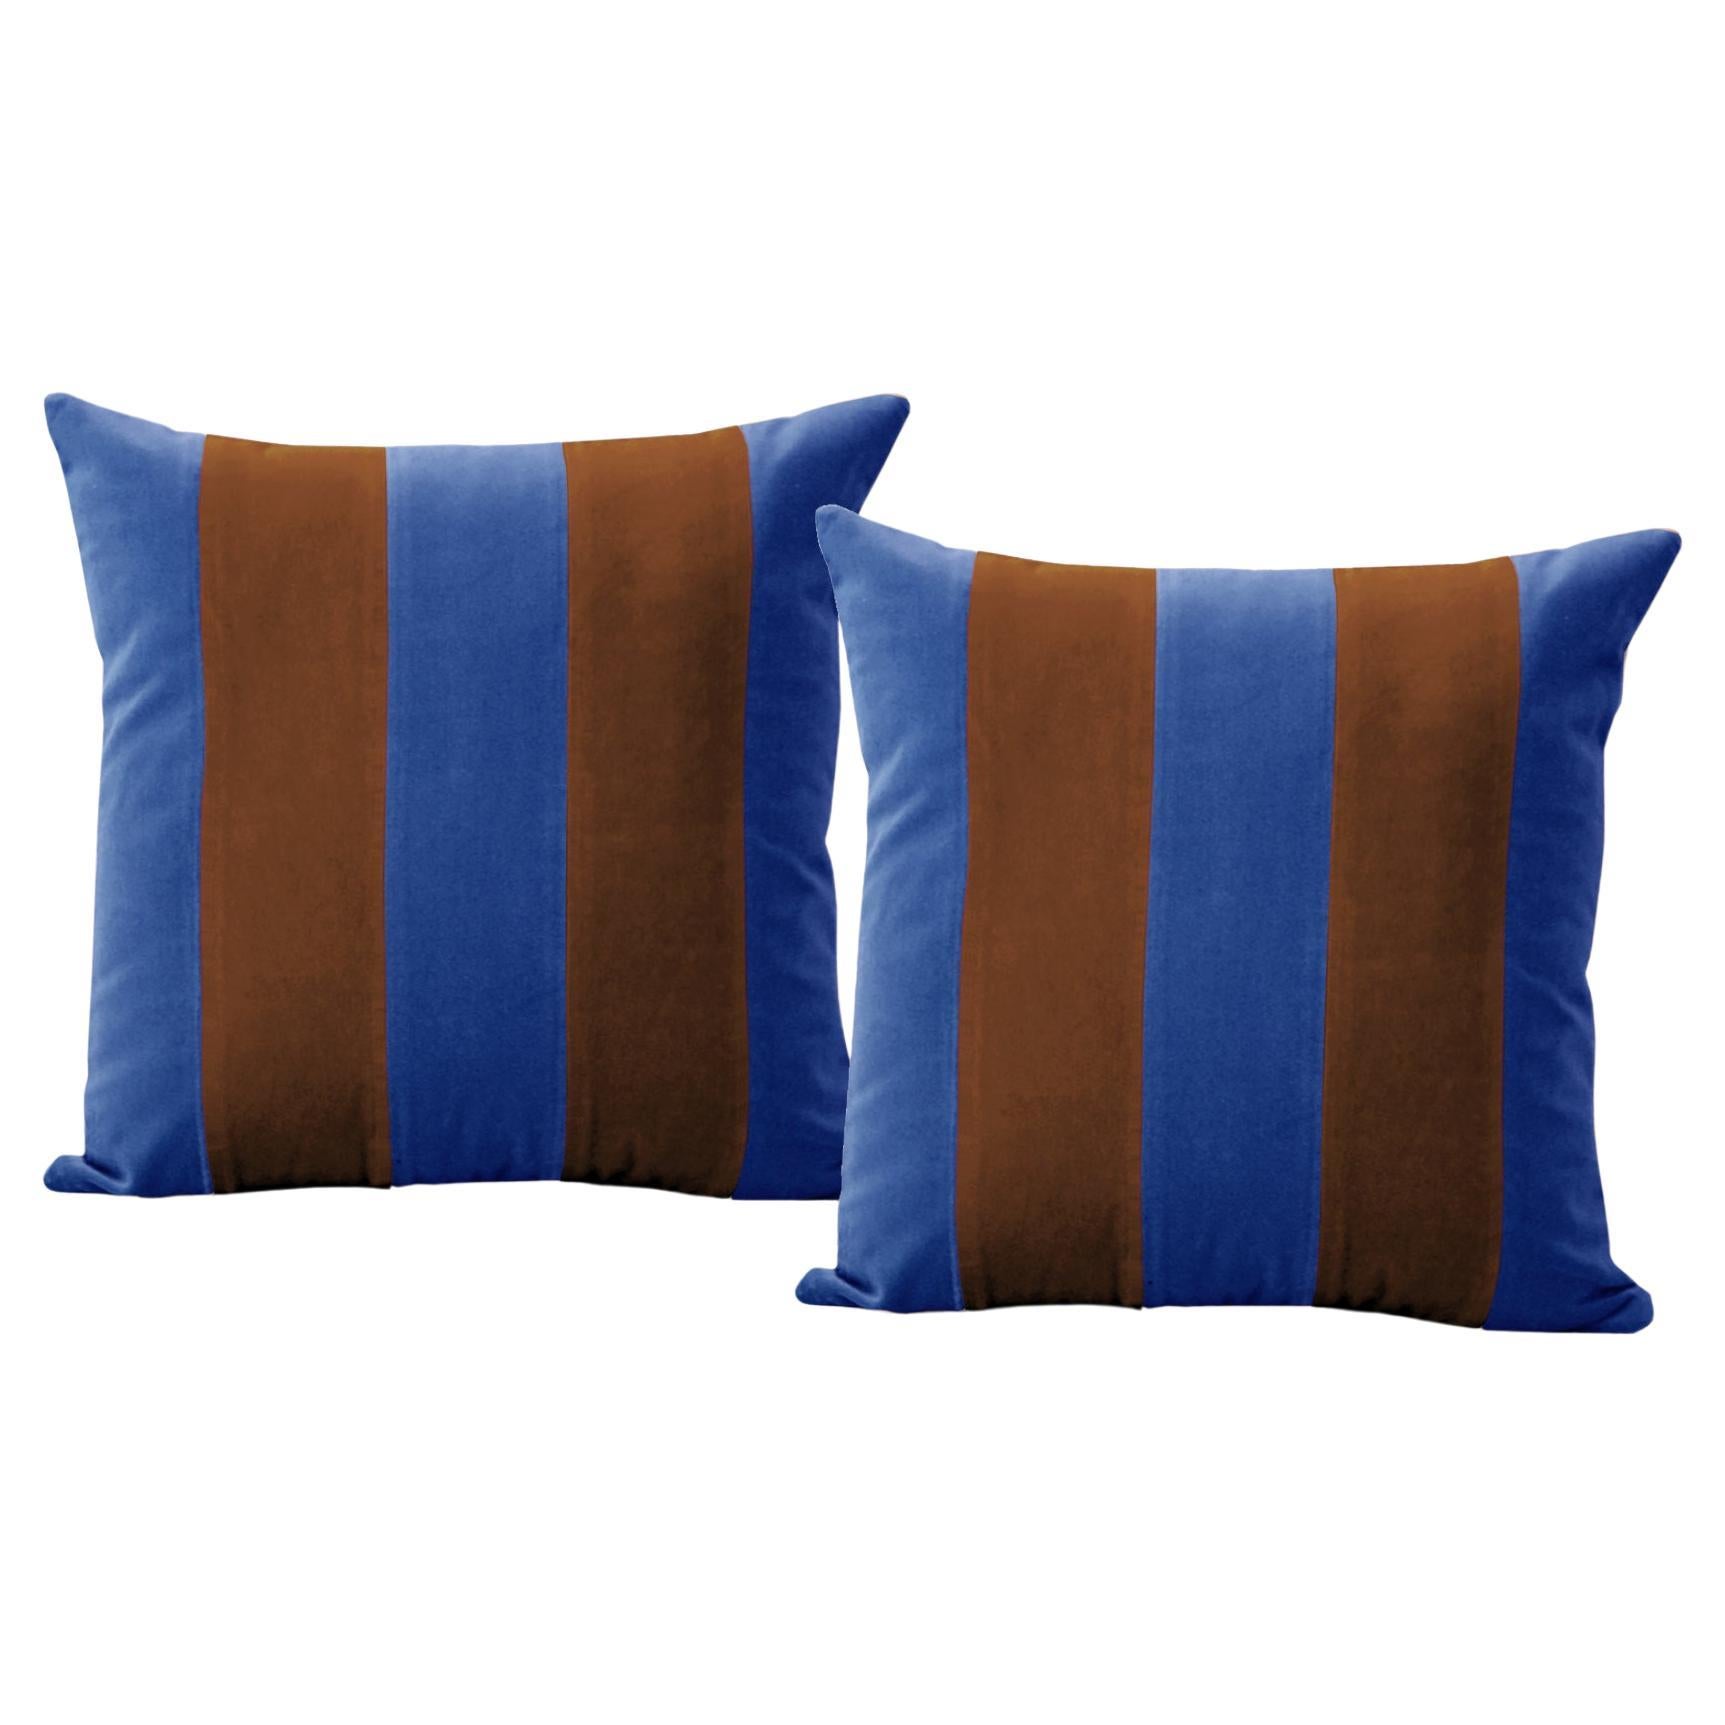 Gemma cobalt blue & Brown Set of 2 Velvet Deluxe Handmade Decorative Pillows